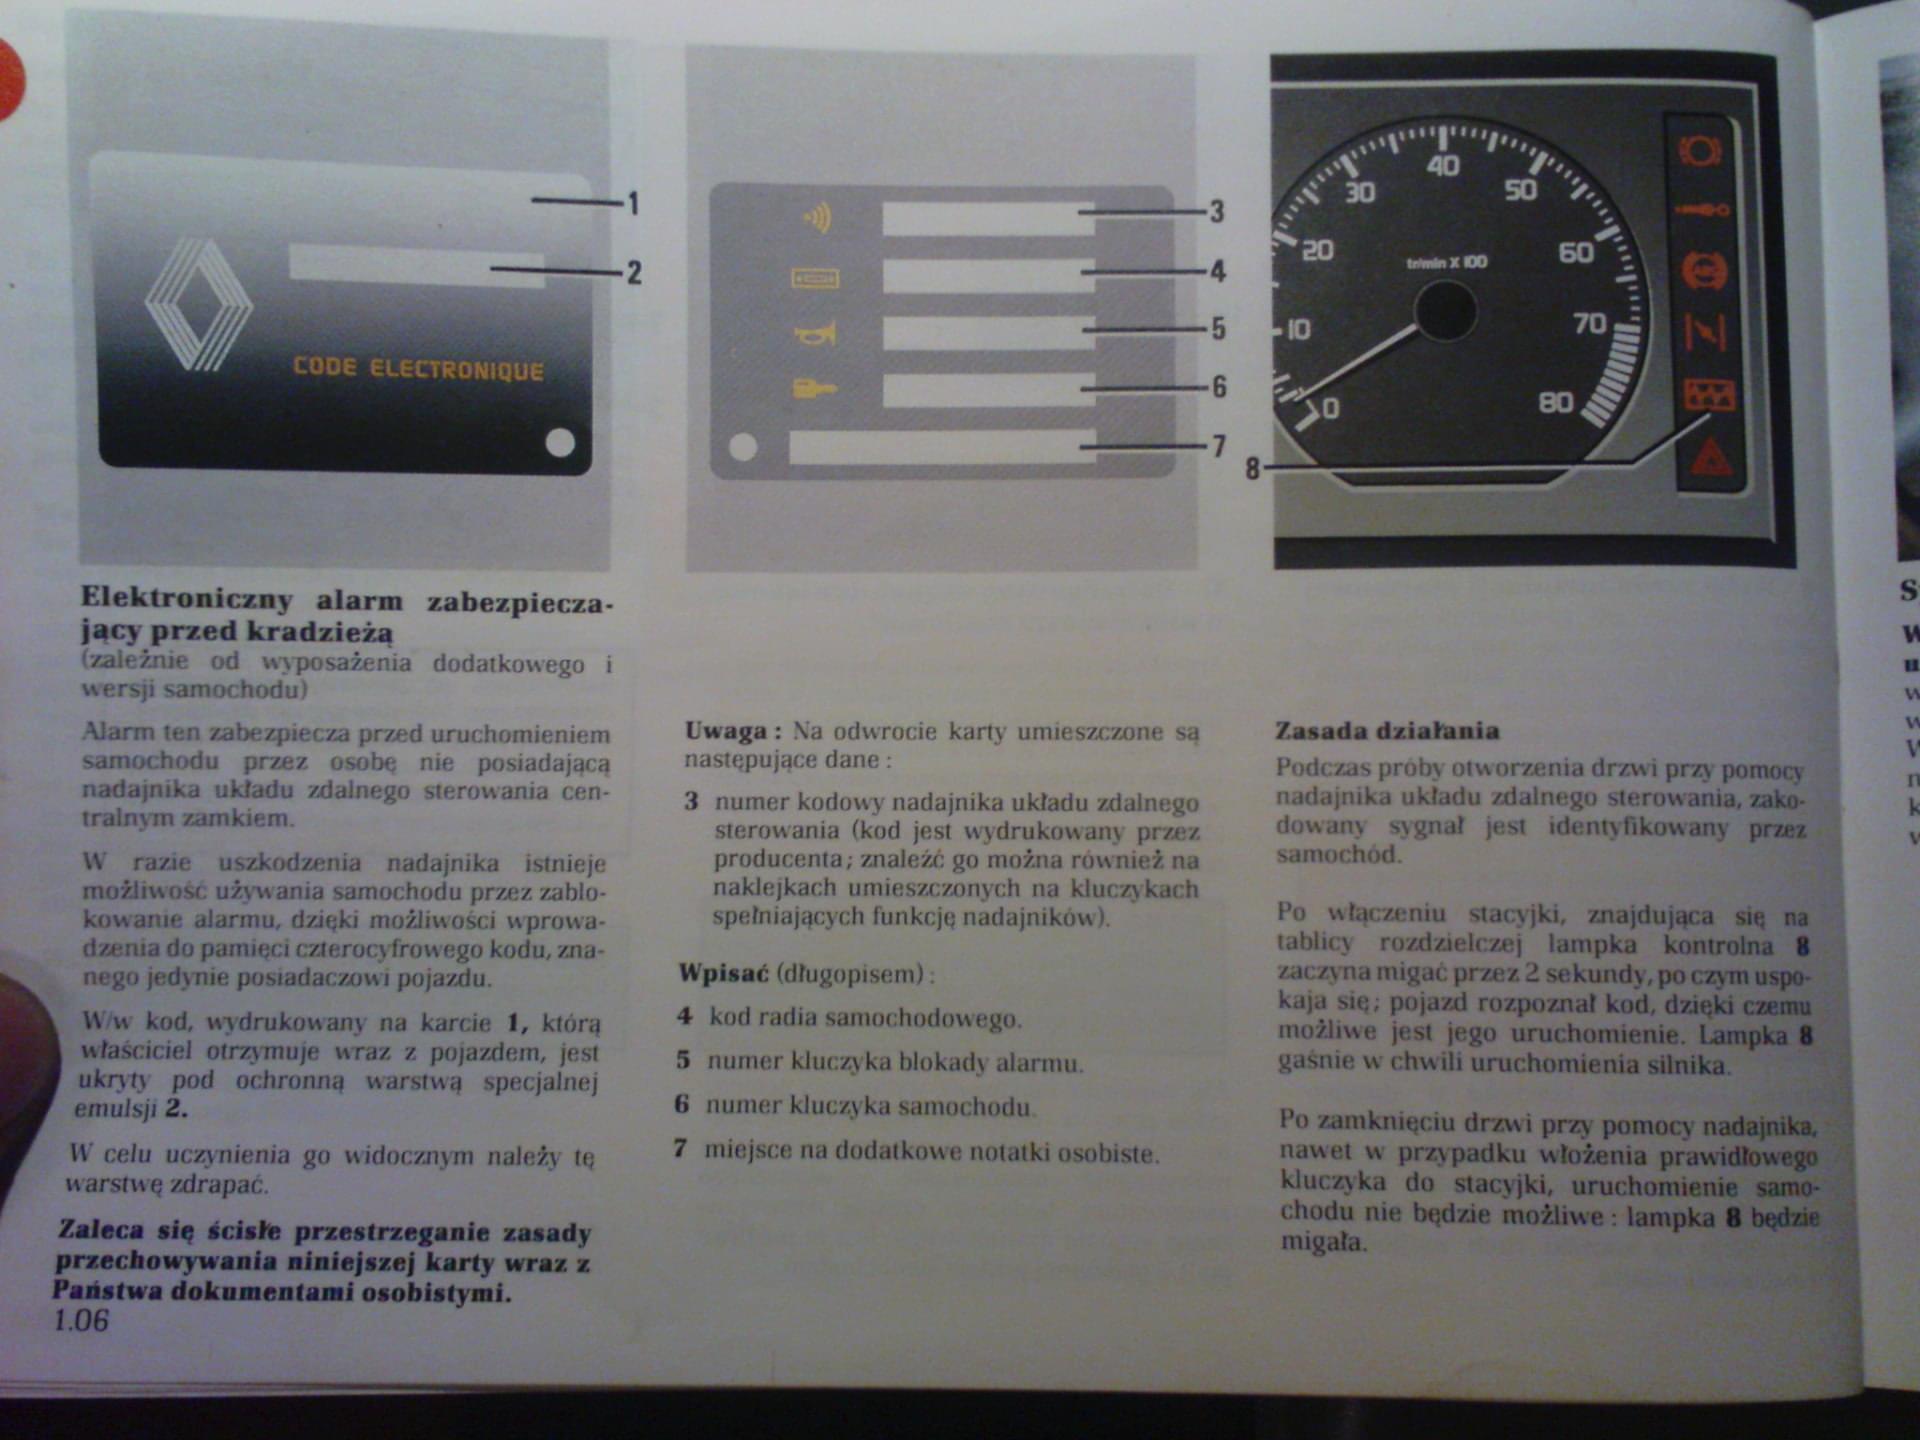 Renault19.pl Forum dyskusyjne [F] Fabryczny immobiliser